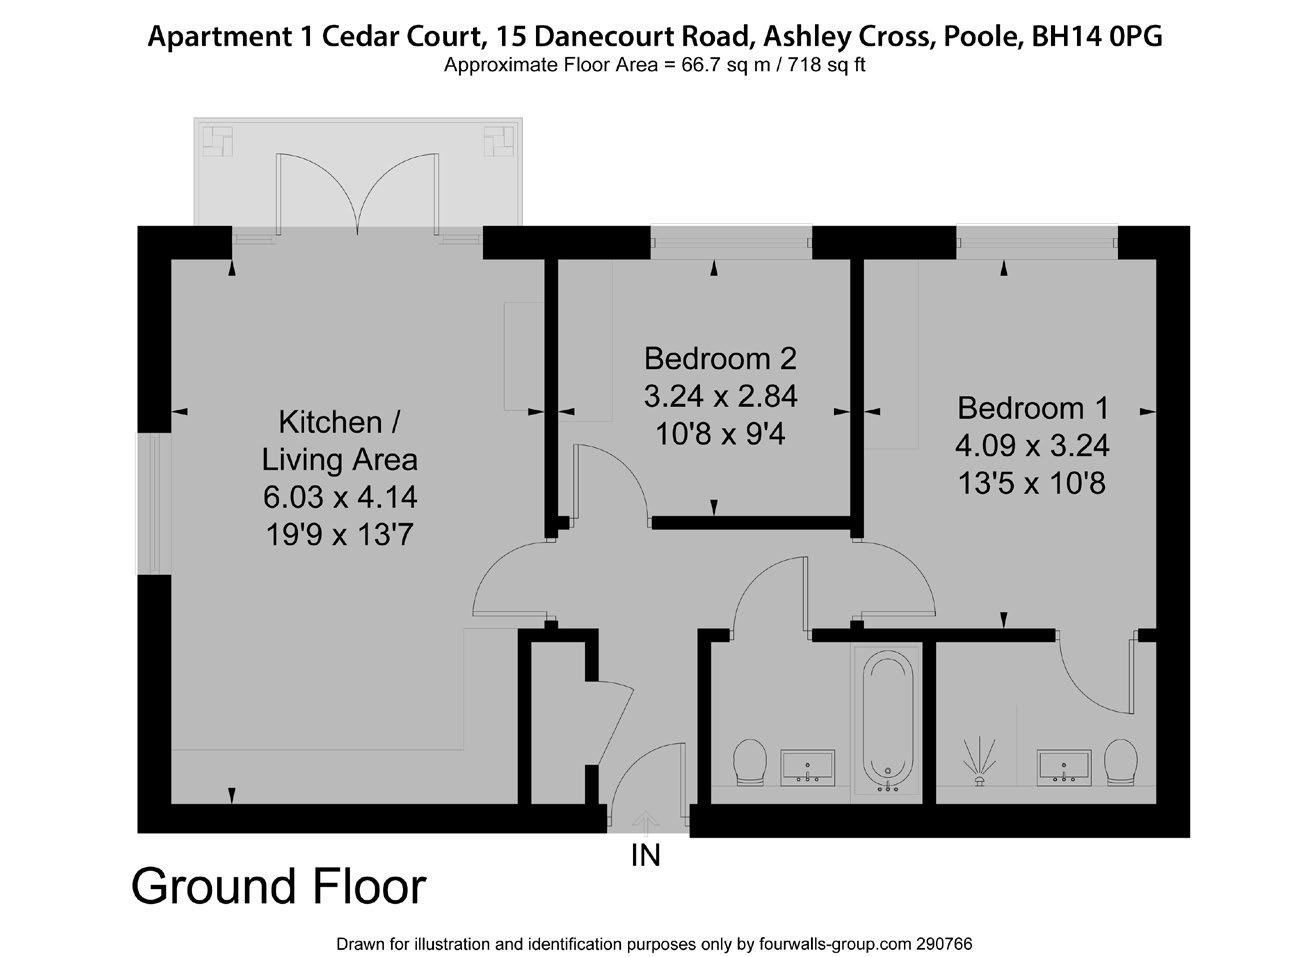 Apartment 1 Cedar Court floor plan